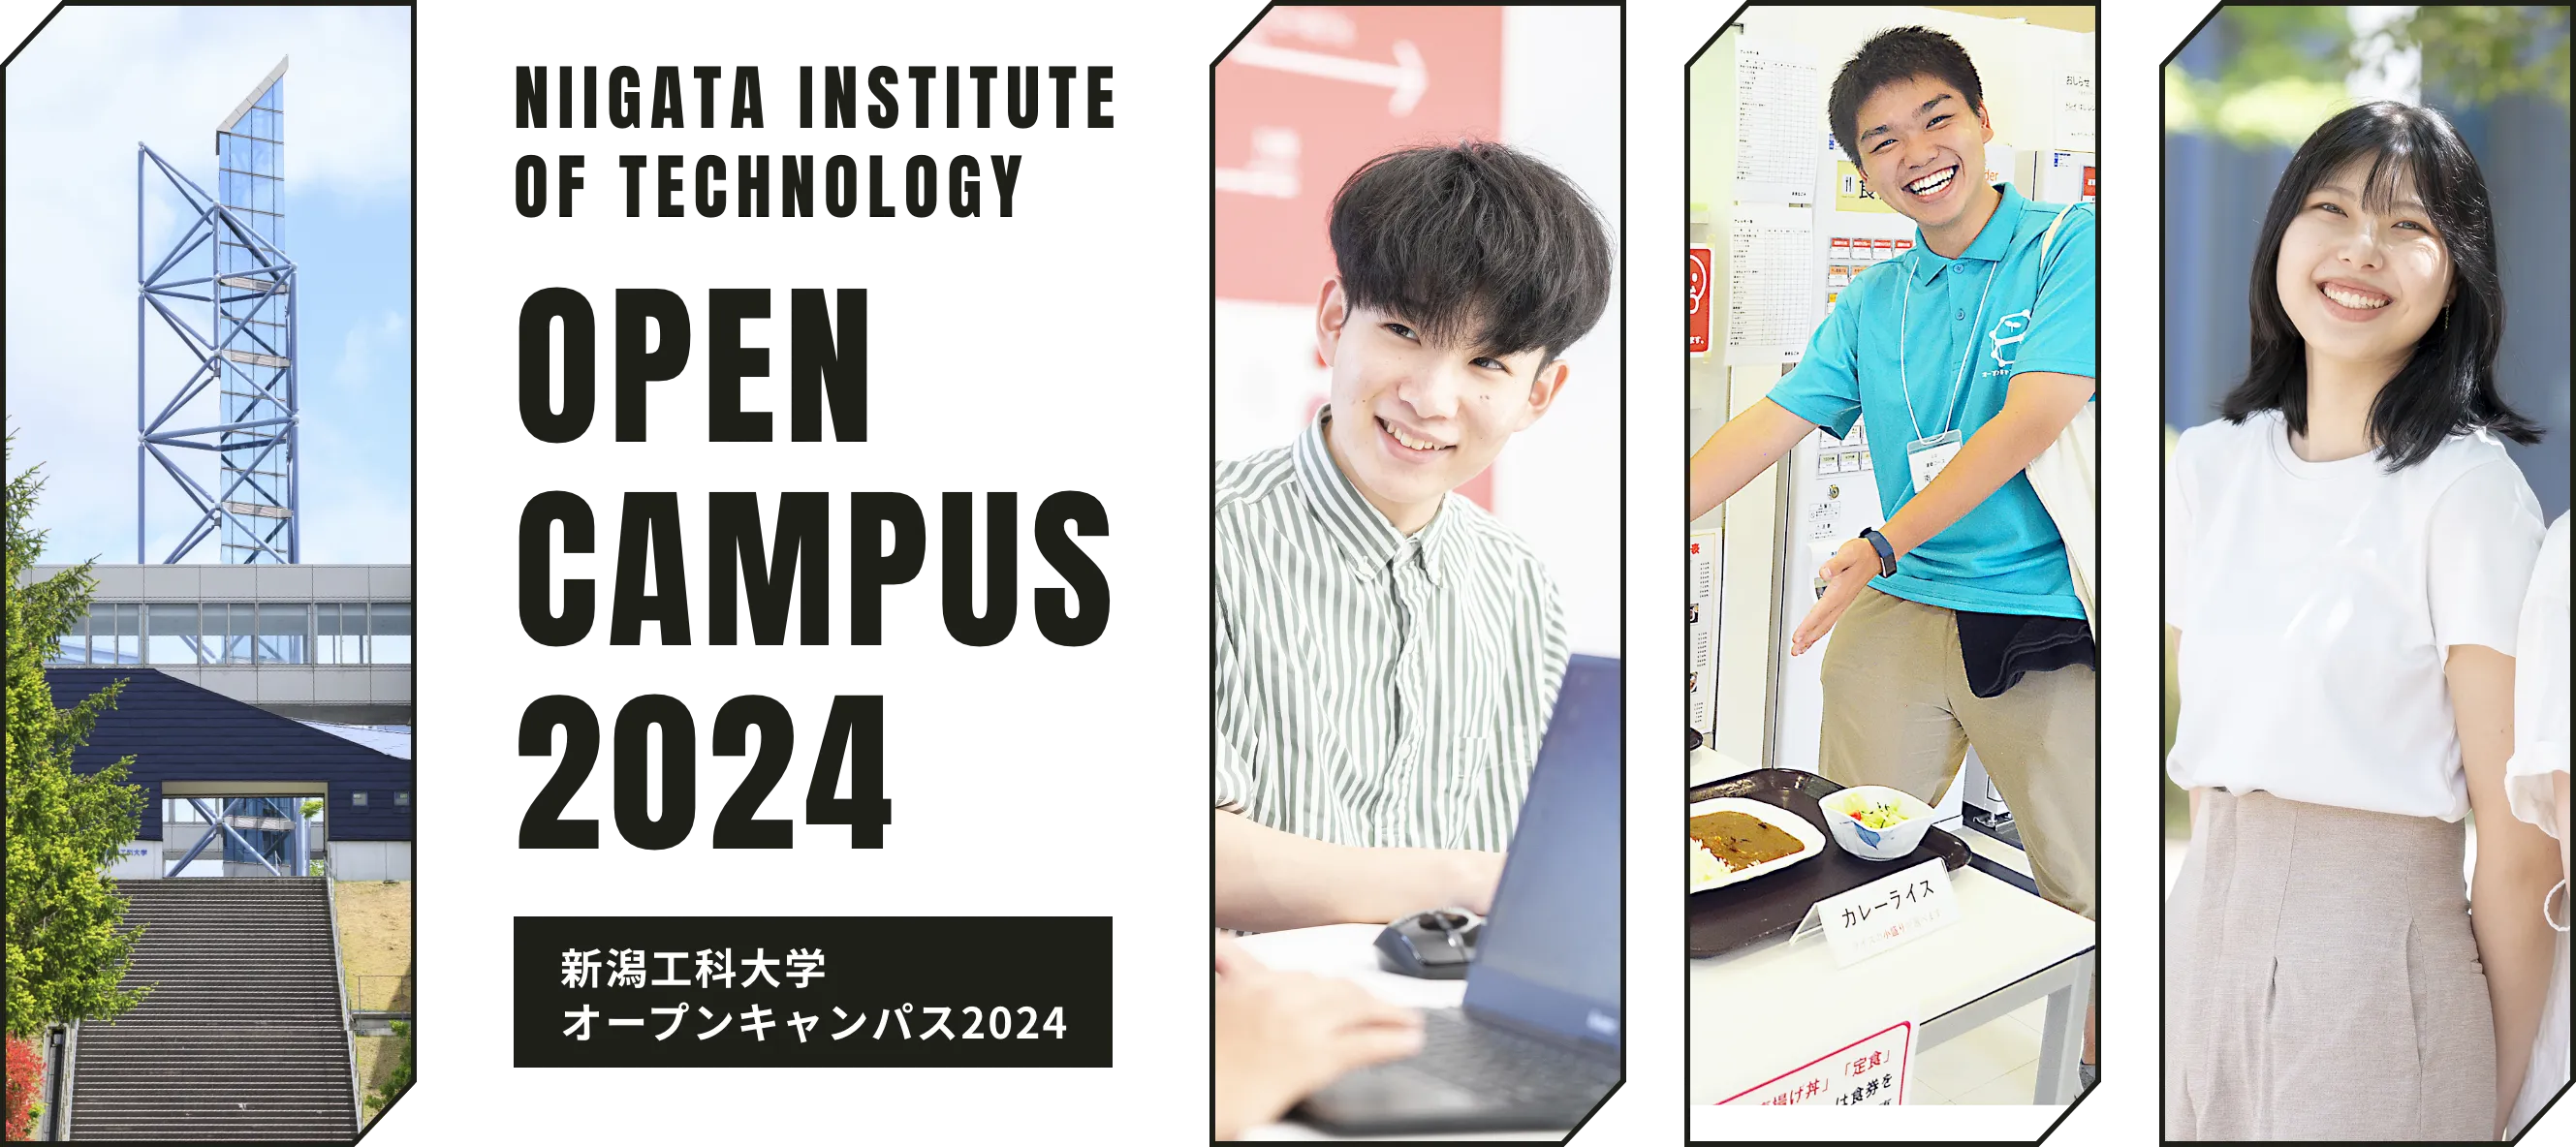 NIIGATA INSTITUTE OF TECHNOLOGY OPEN CAMPUS 2024 新潟工科大学 オープンキャンパス2024